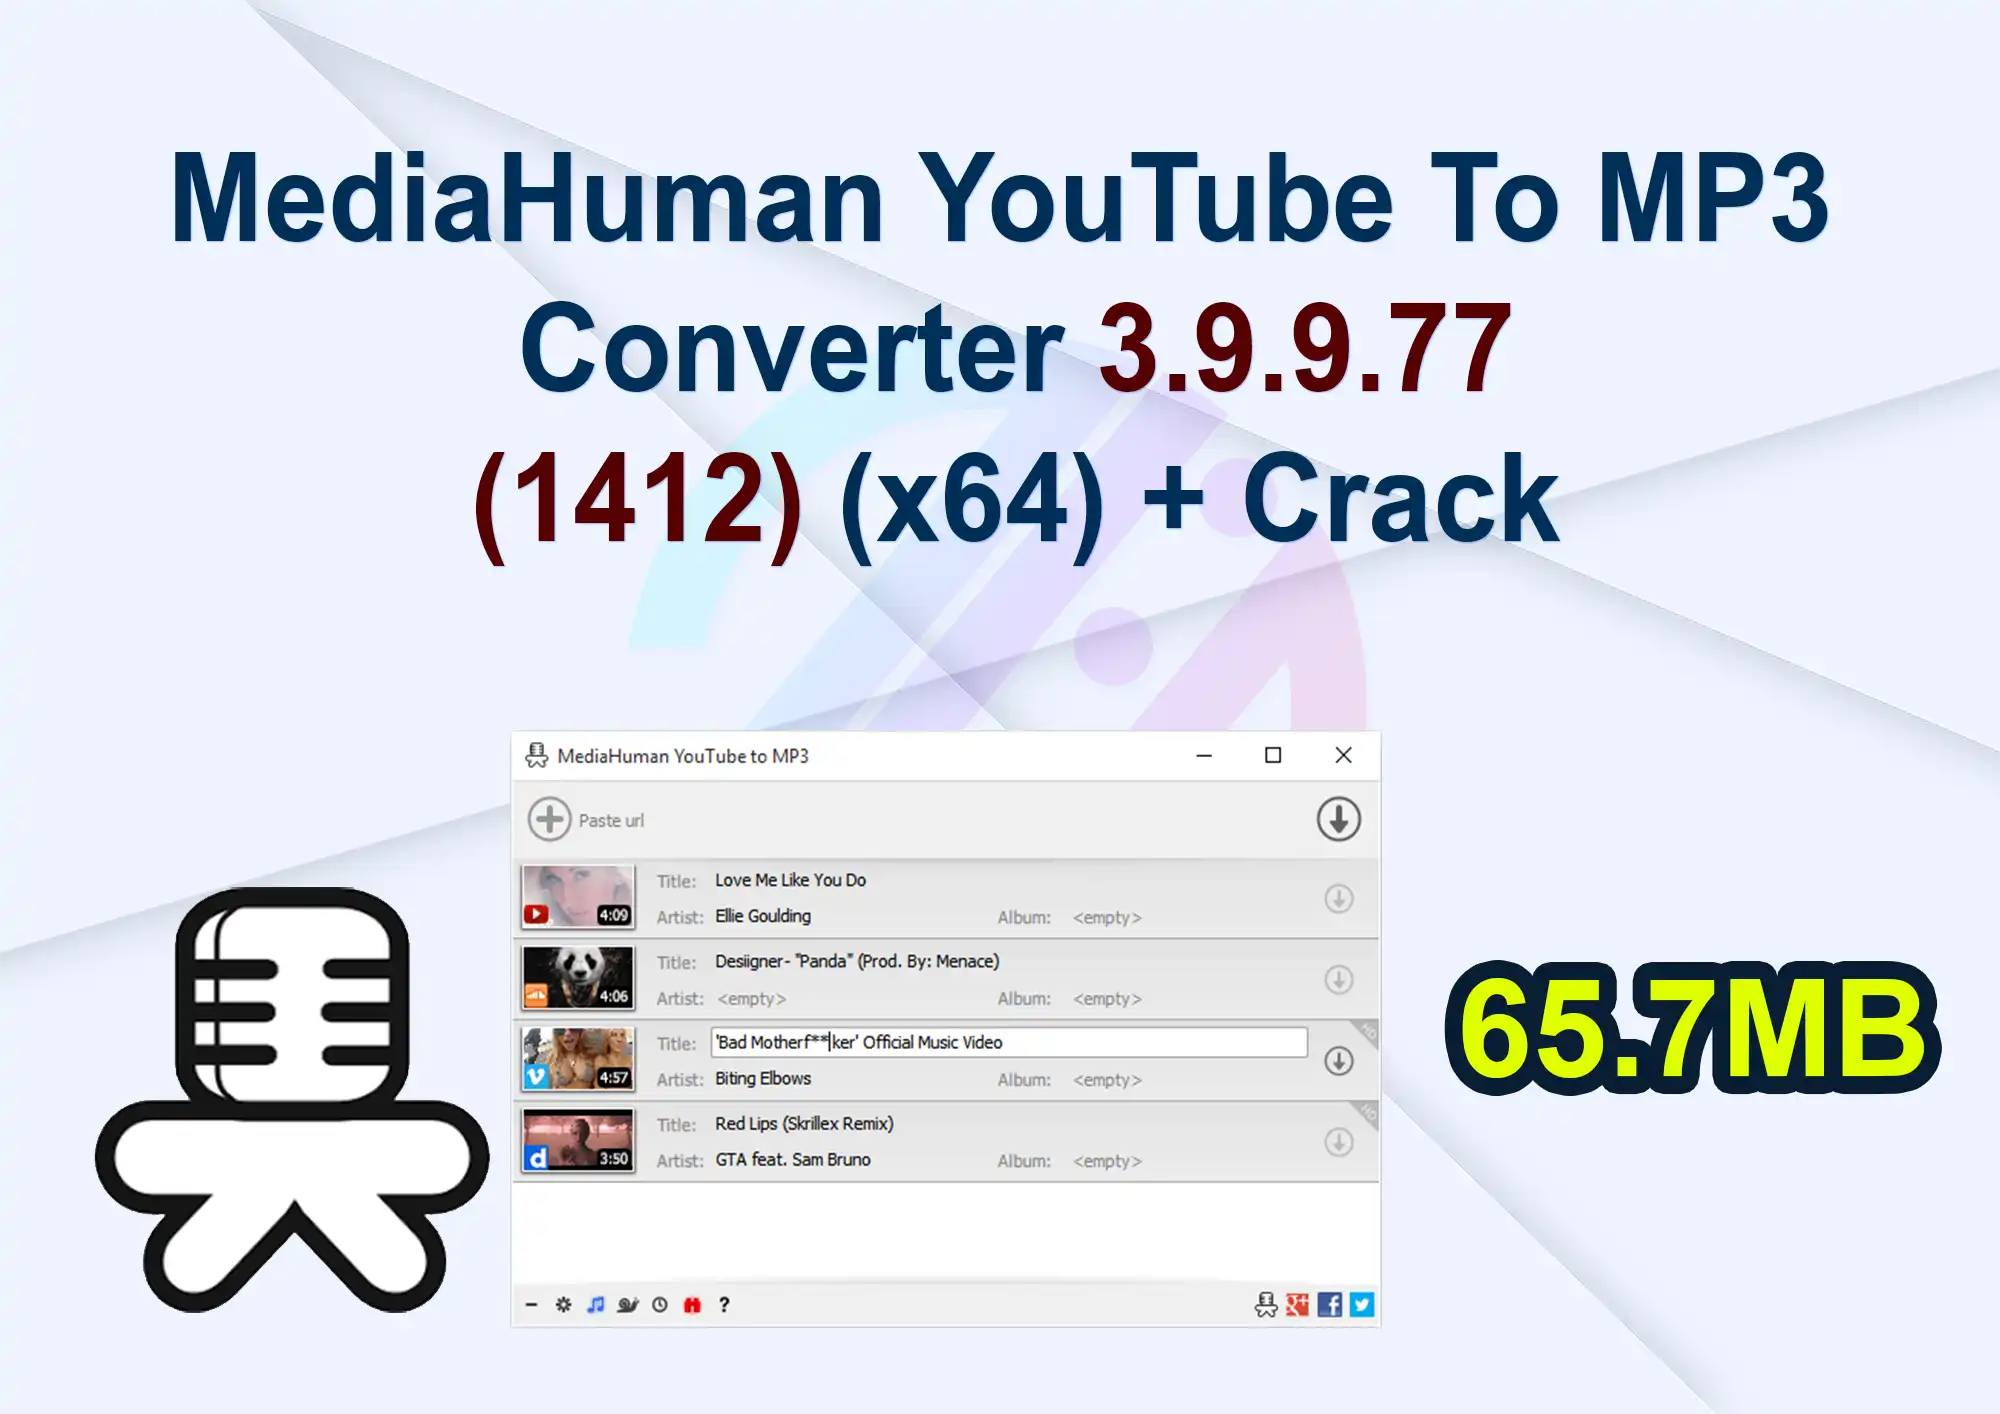 MediaHuman YouTube To MP3 Converter 3.9.9.77 (1412) (x64) + Crack